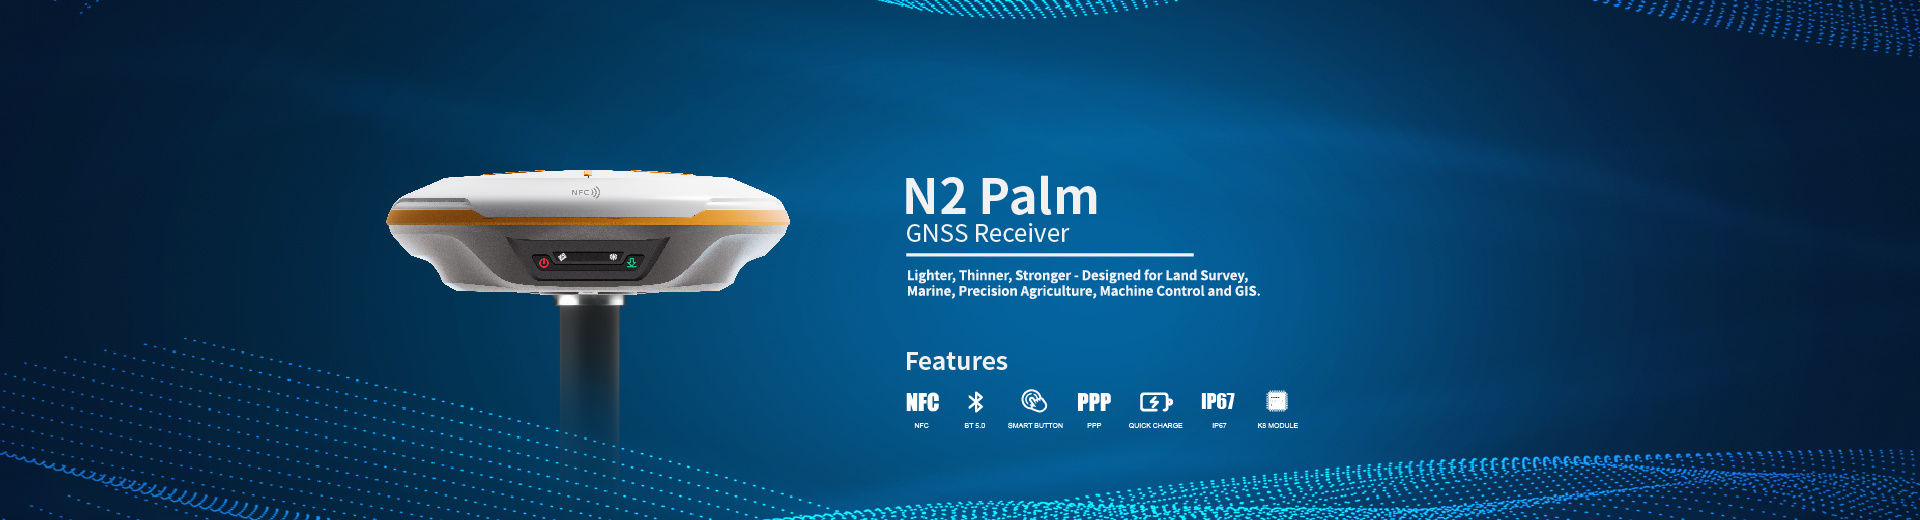 N2 Palm GNSS Receiver